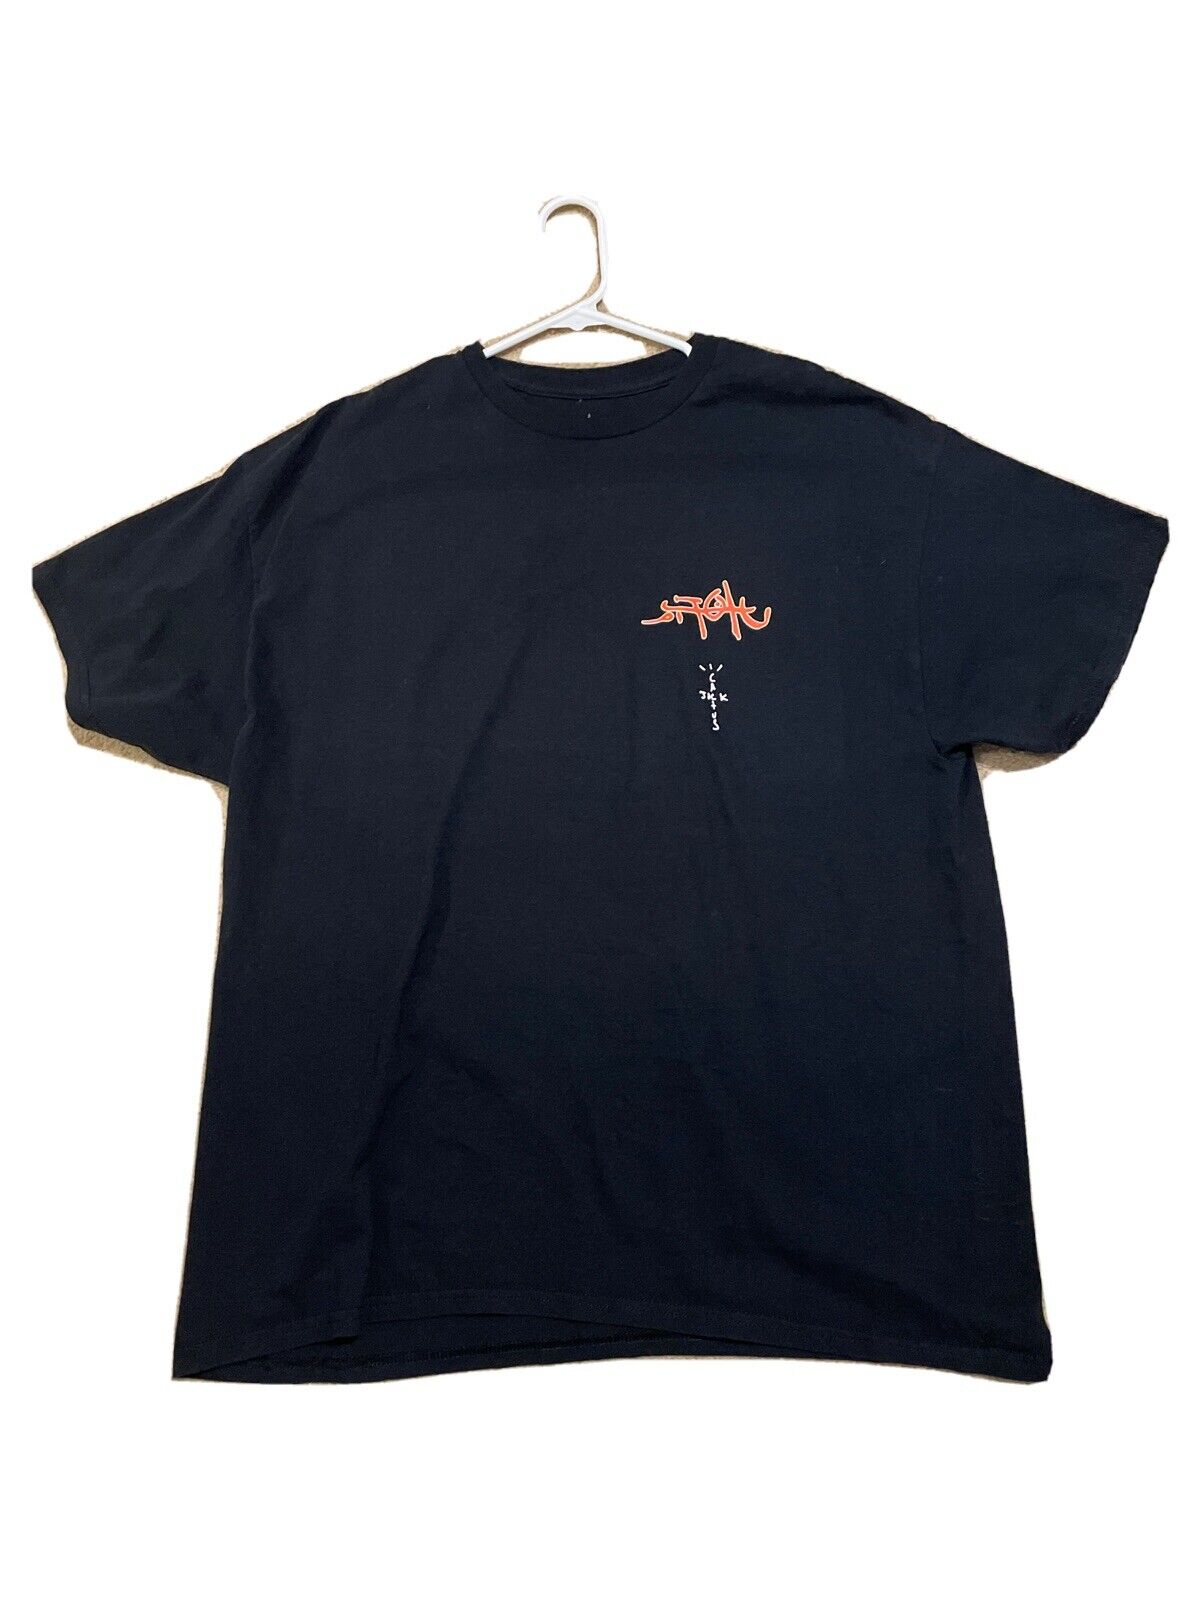 Travis Scott Limited Edition Circus Maximus T-Shirt | eBay